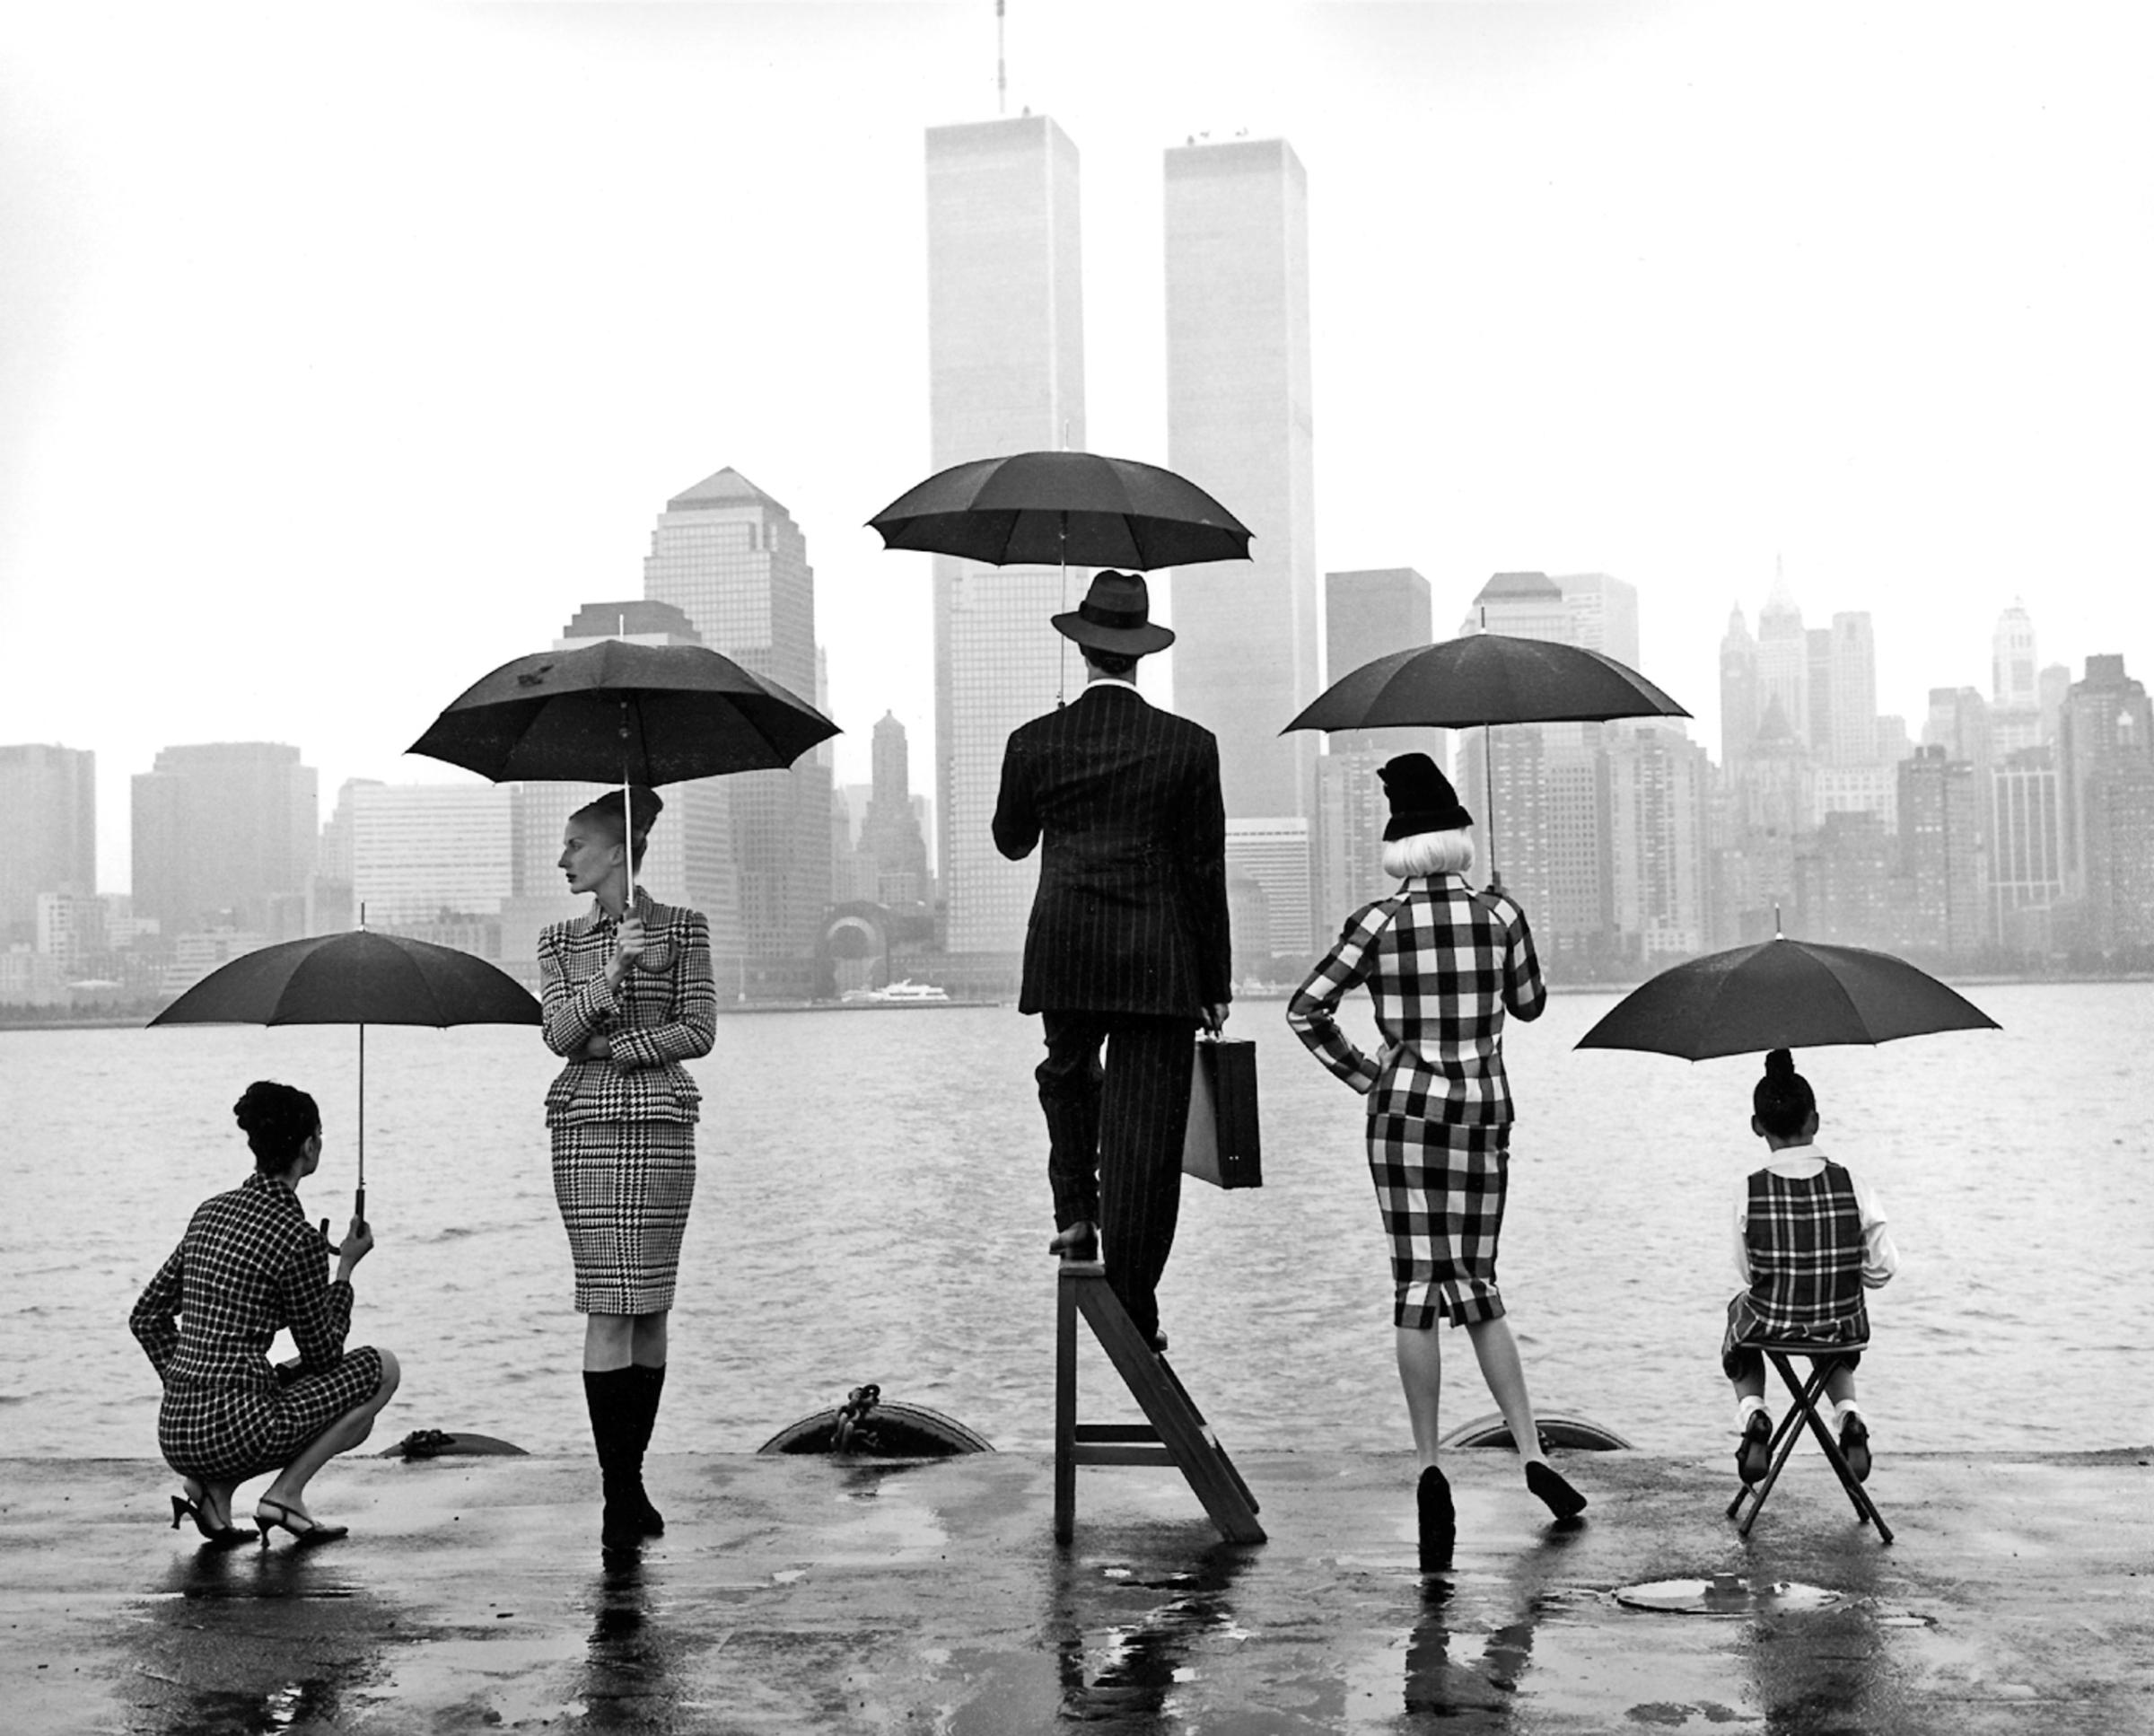 Rodney Smith photograph, Skyline, Hudson River, New York, 1995.